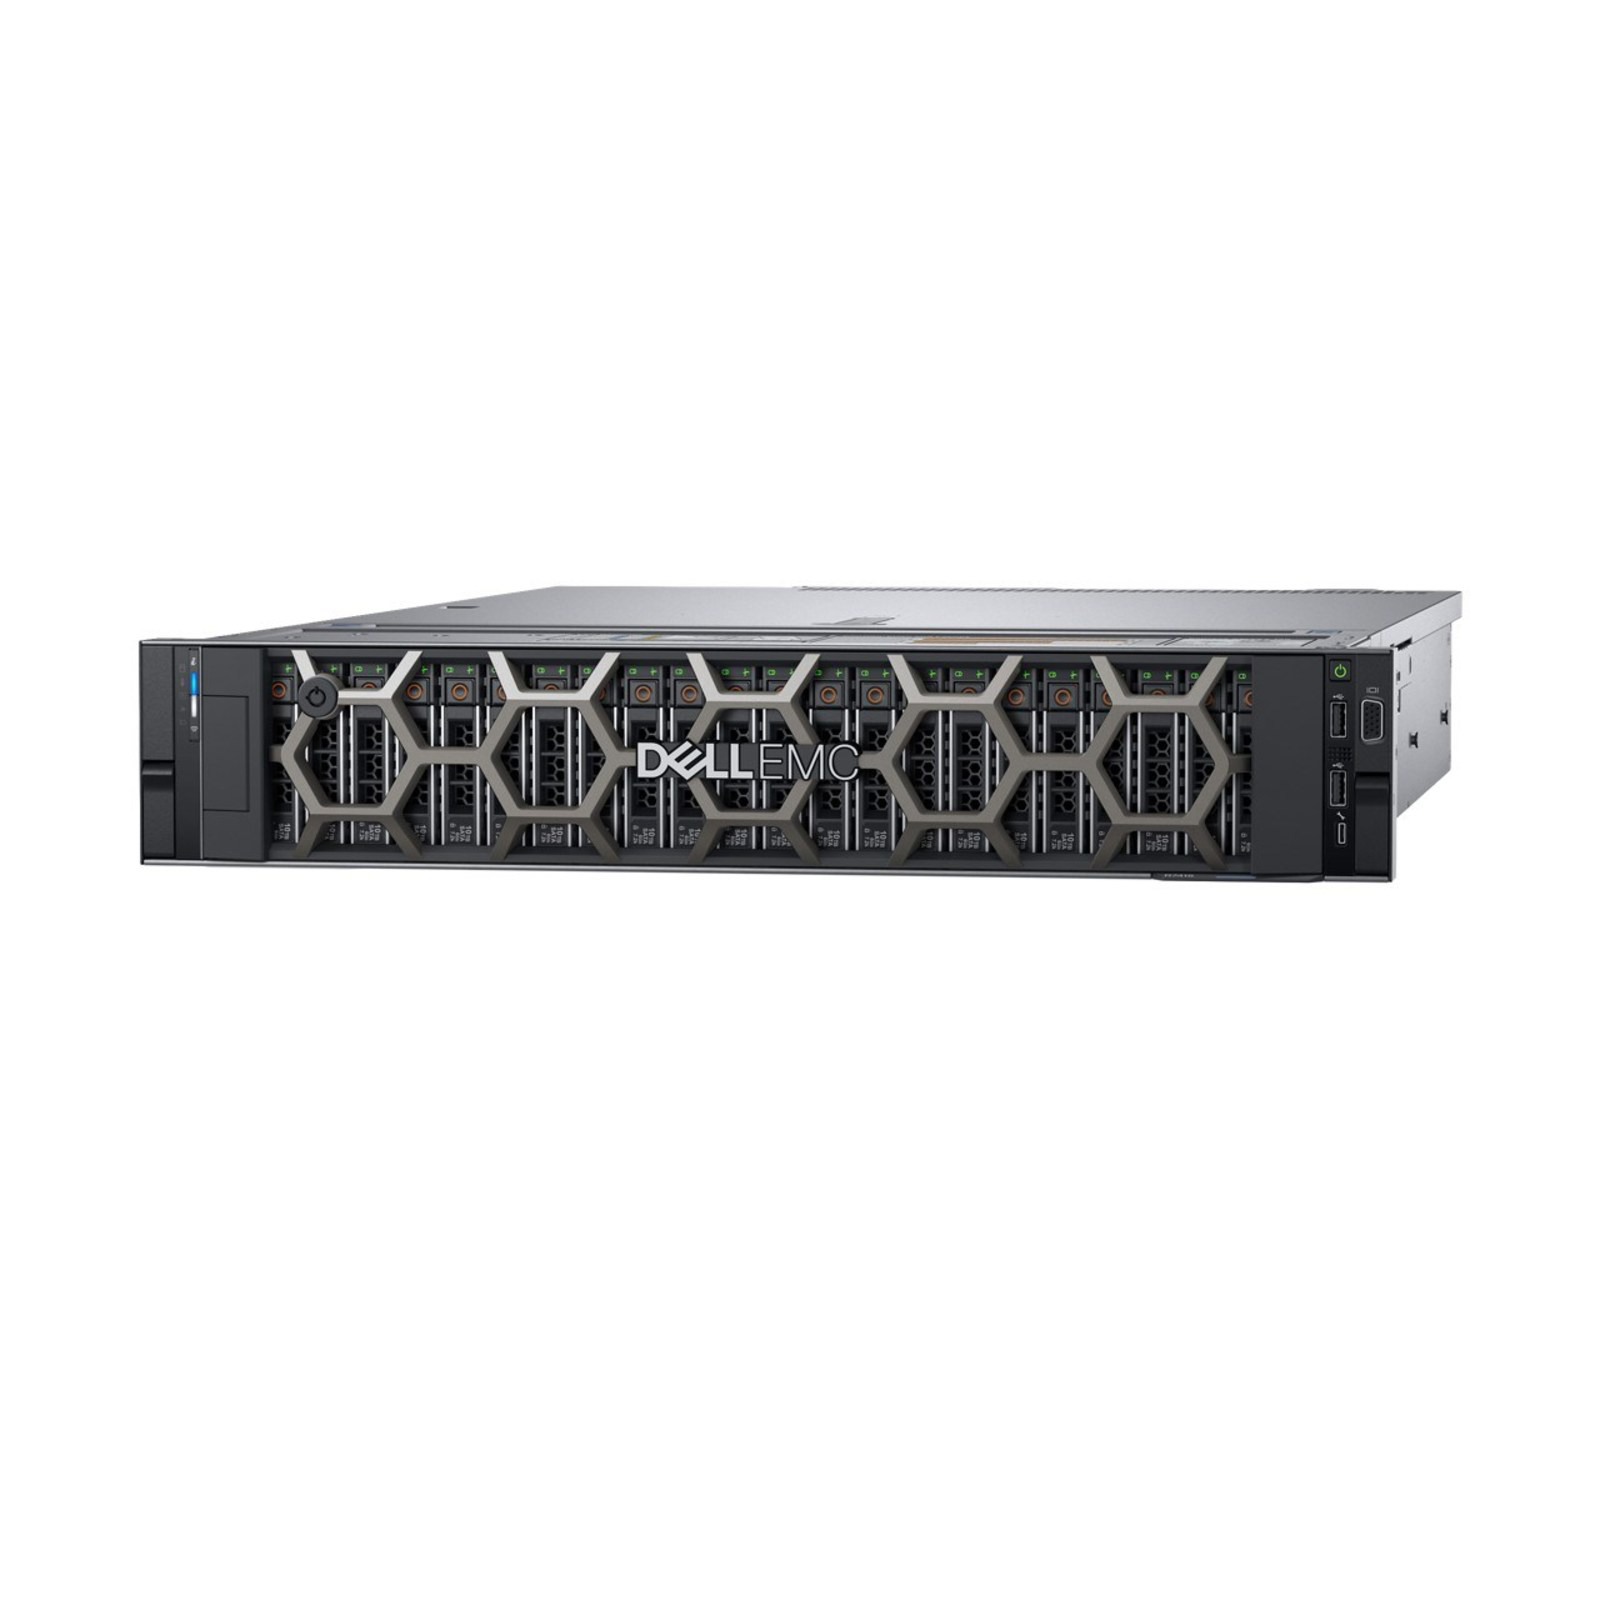 Dell EMC expands server capabilities for the modern data centre